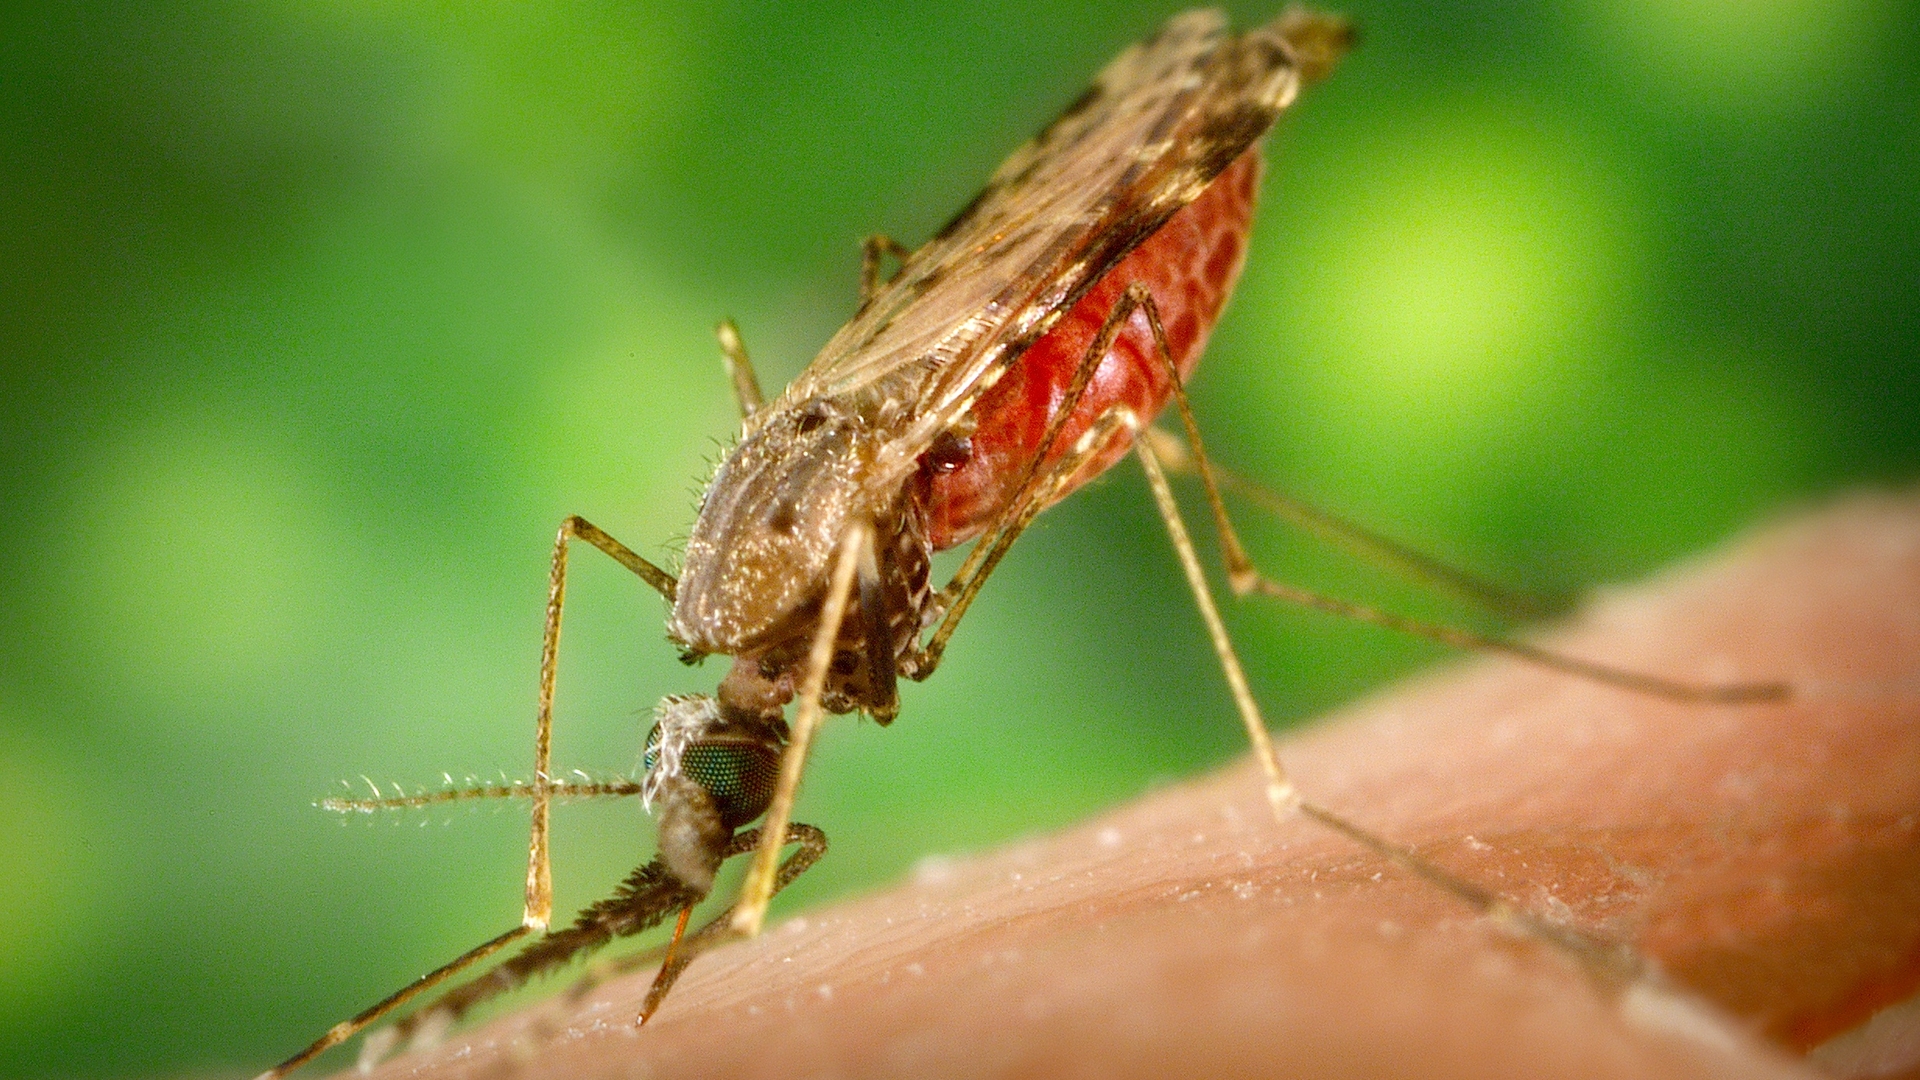 malaria1